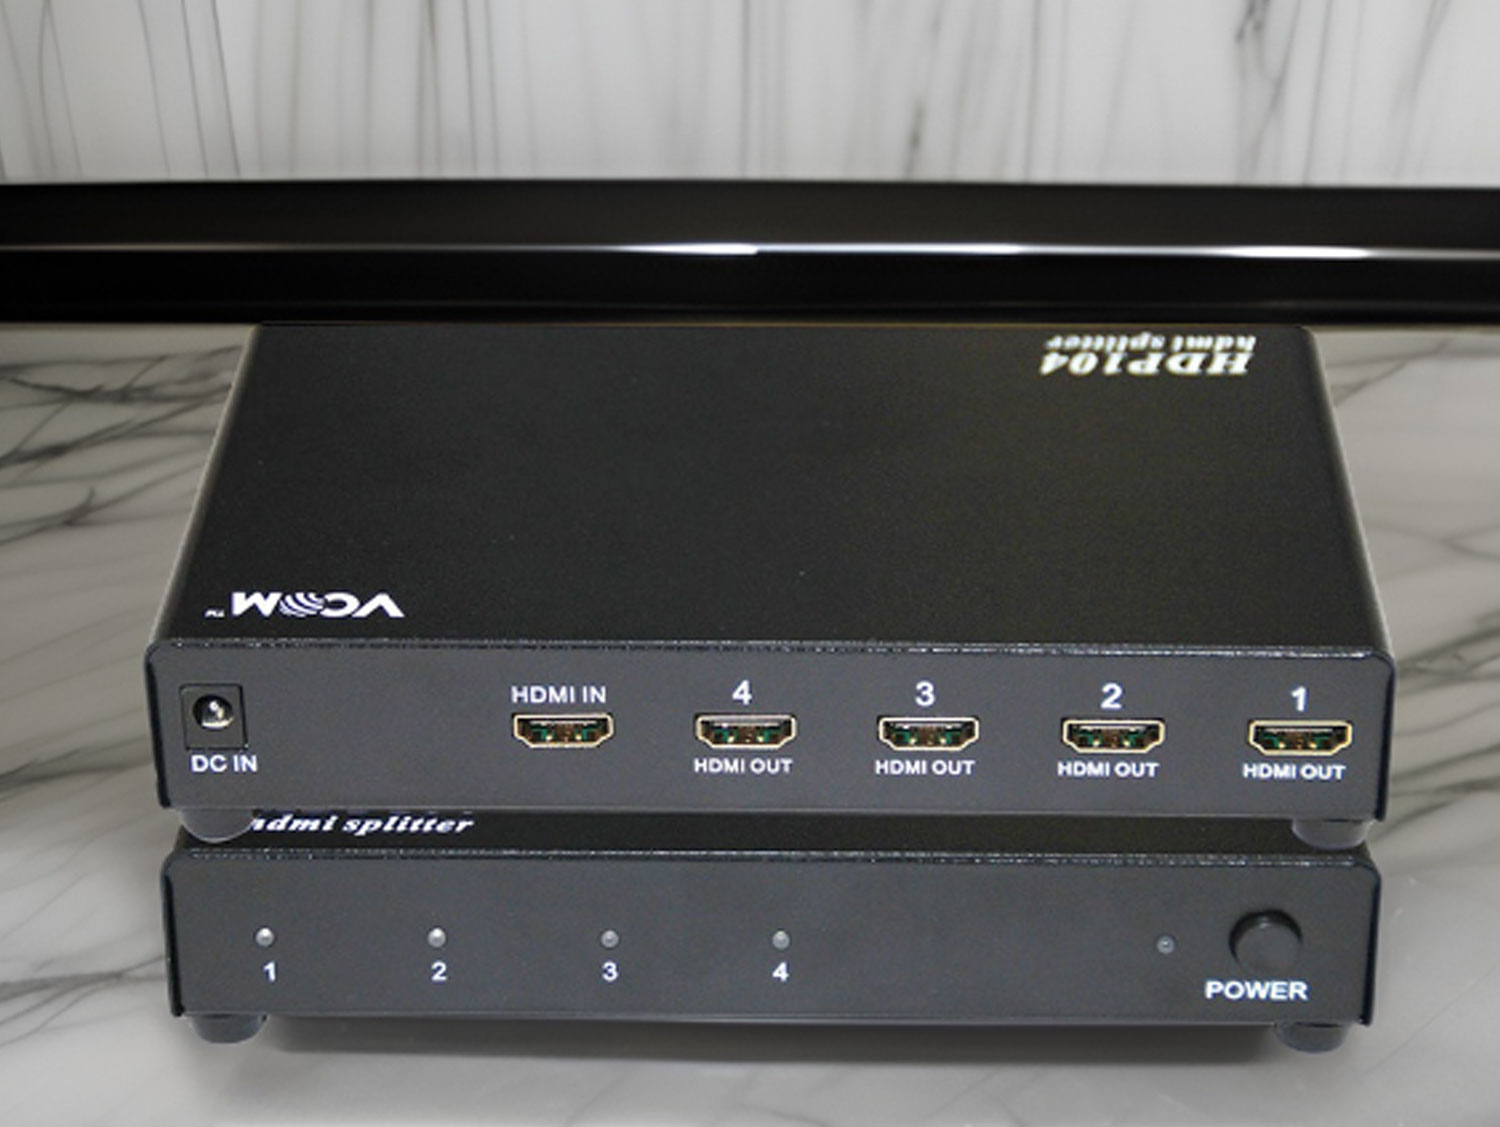 VCOM HDMI Splitter Front View for Event Equipment Rental